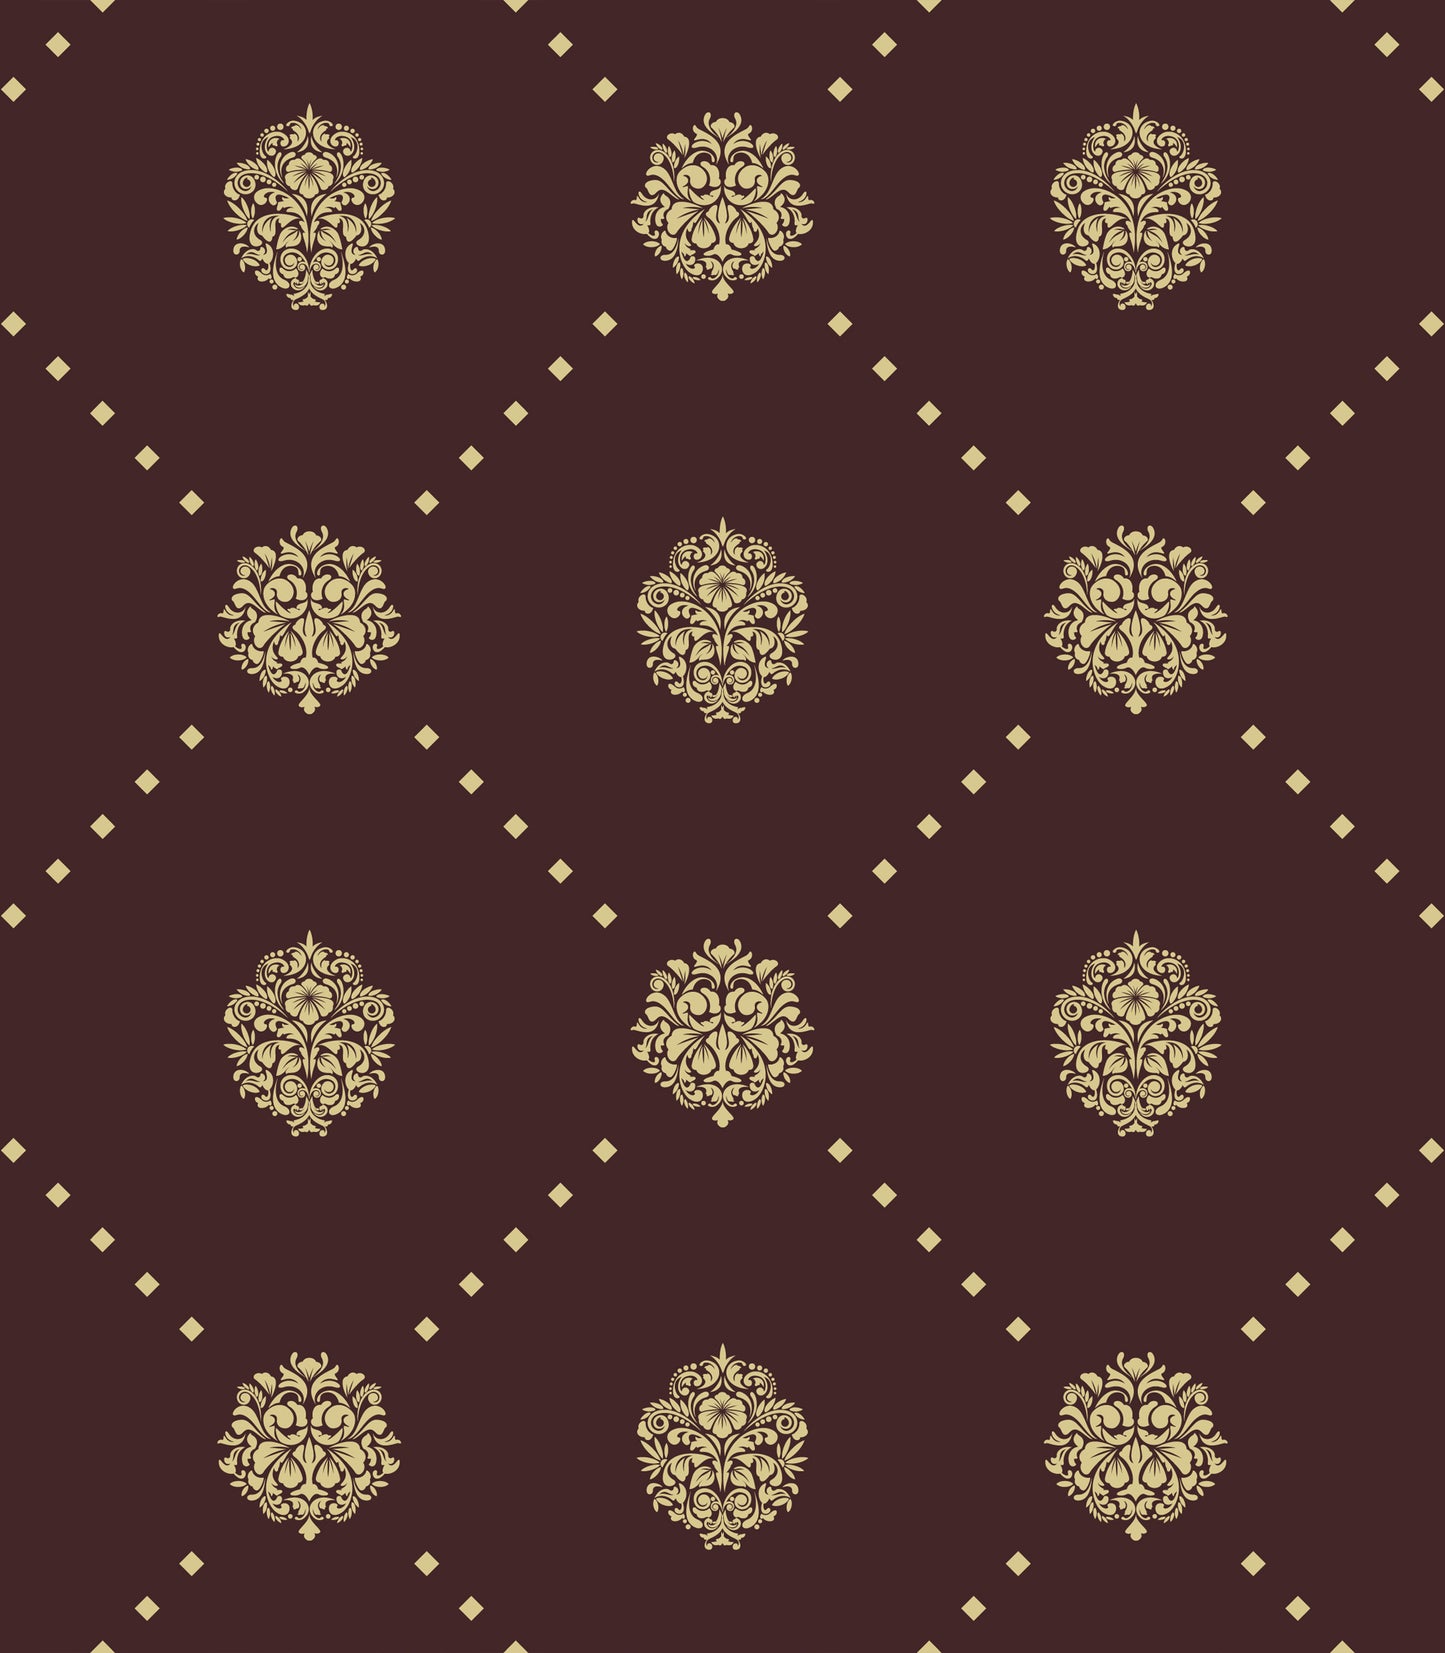 royal baroque seamless pattern background decorative ornament design